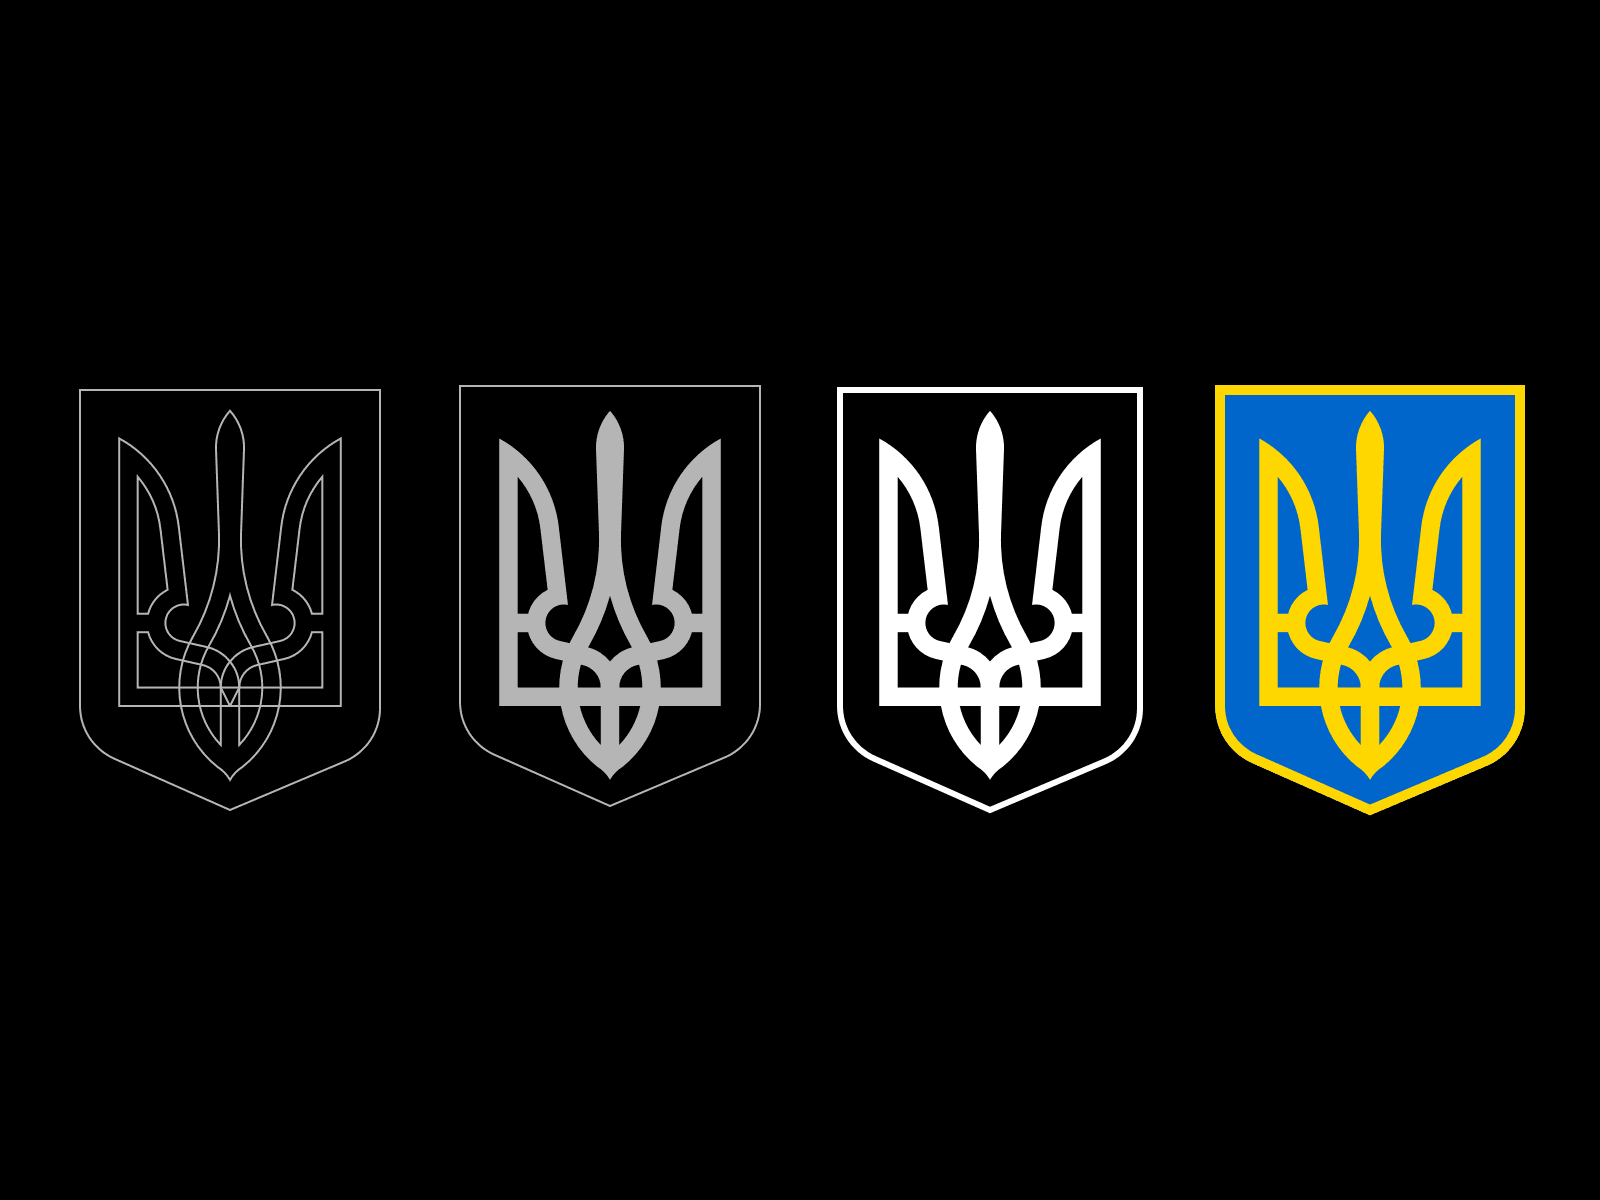 Ukraine Coat of Arms